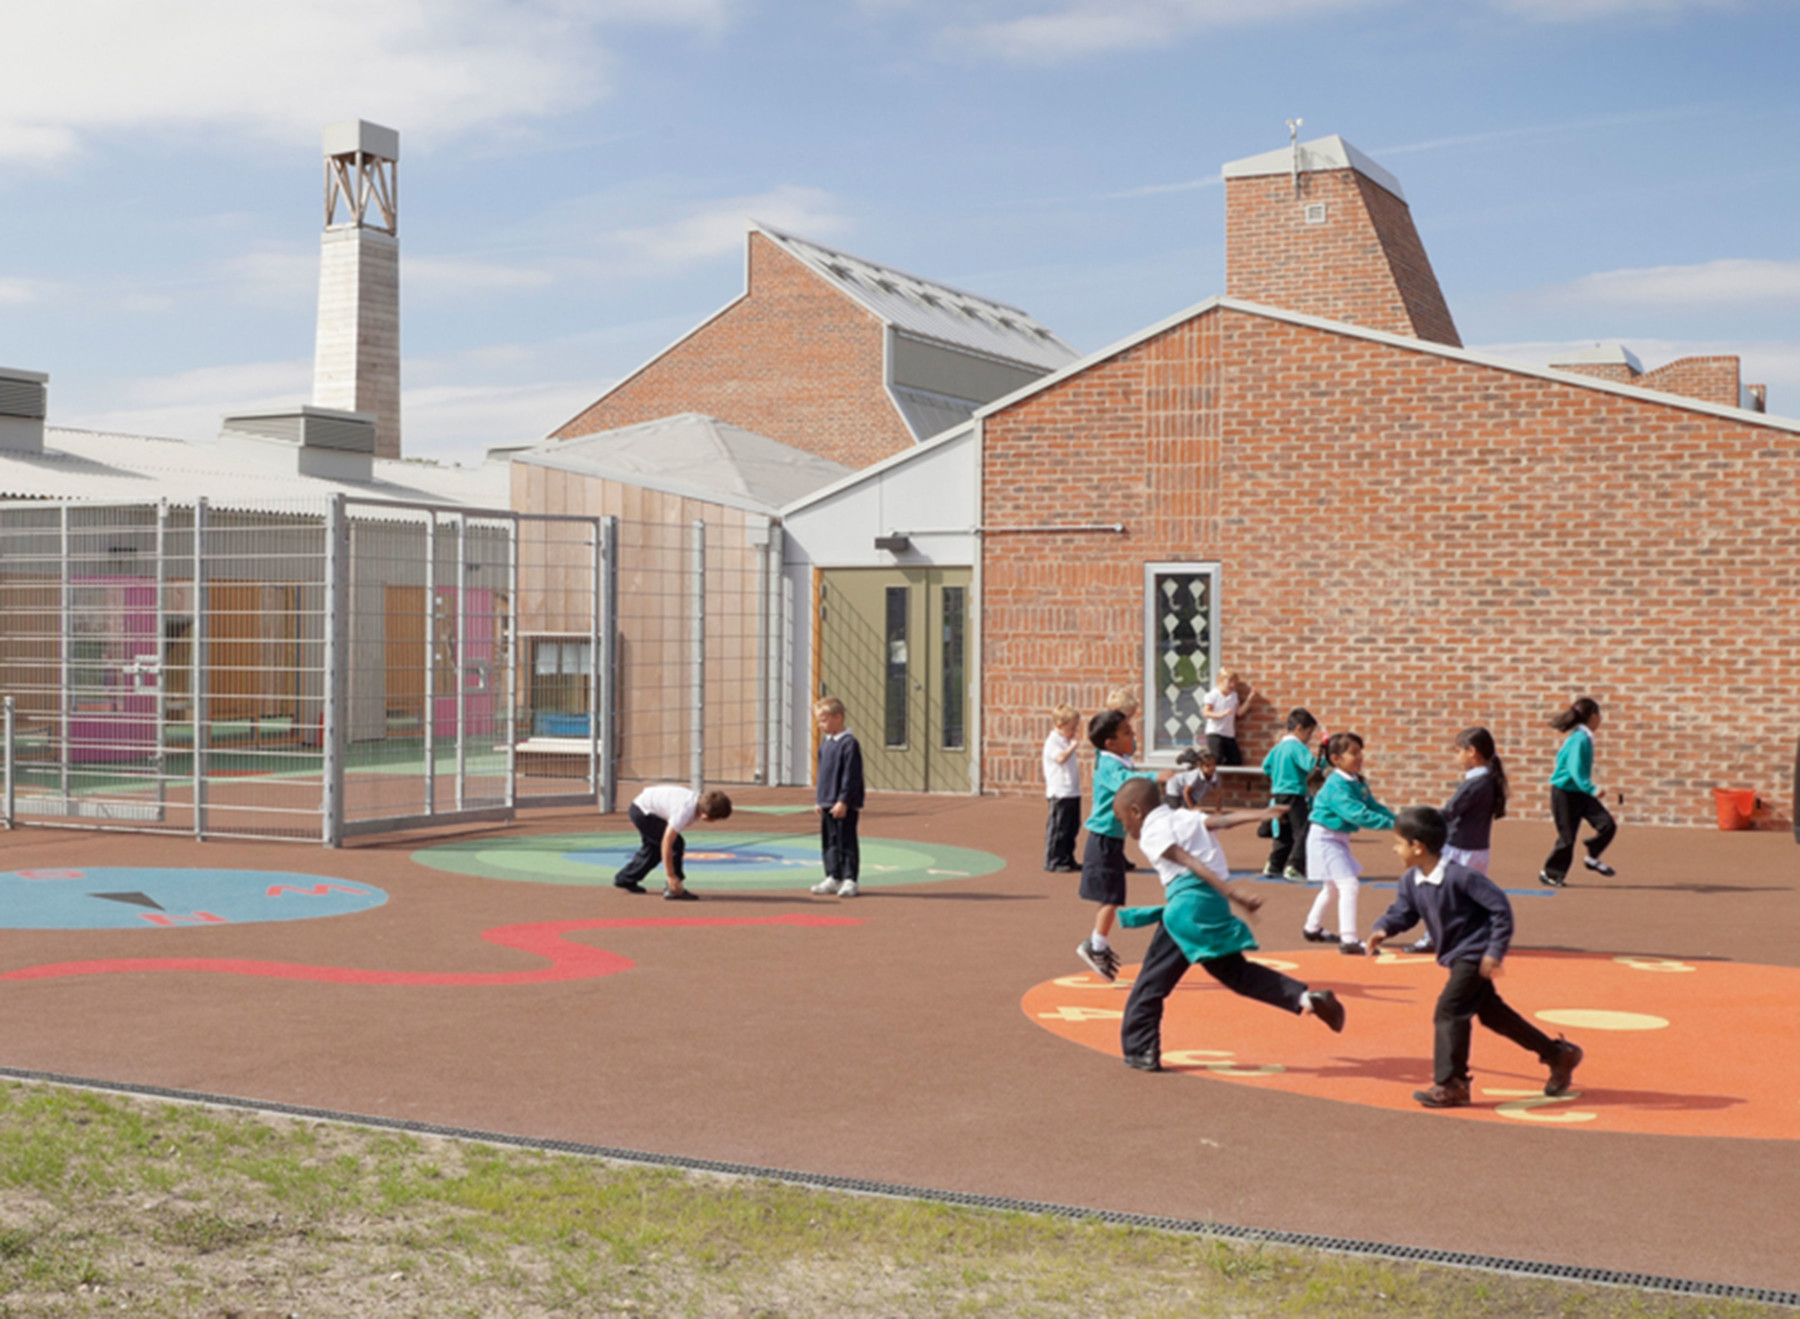 Sarah-Wigglesworth-Architects Sandal-Magna playground 3600